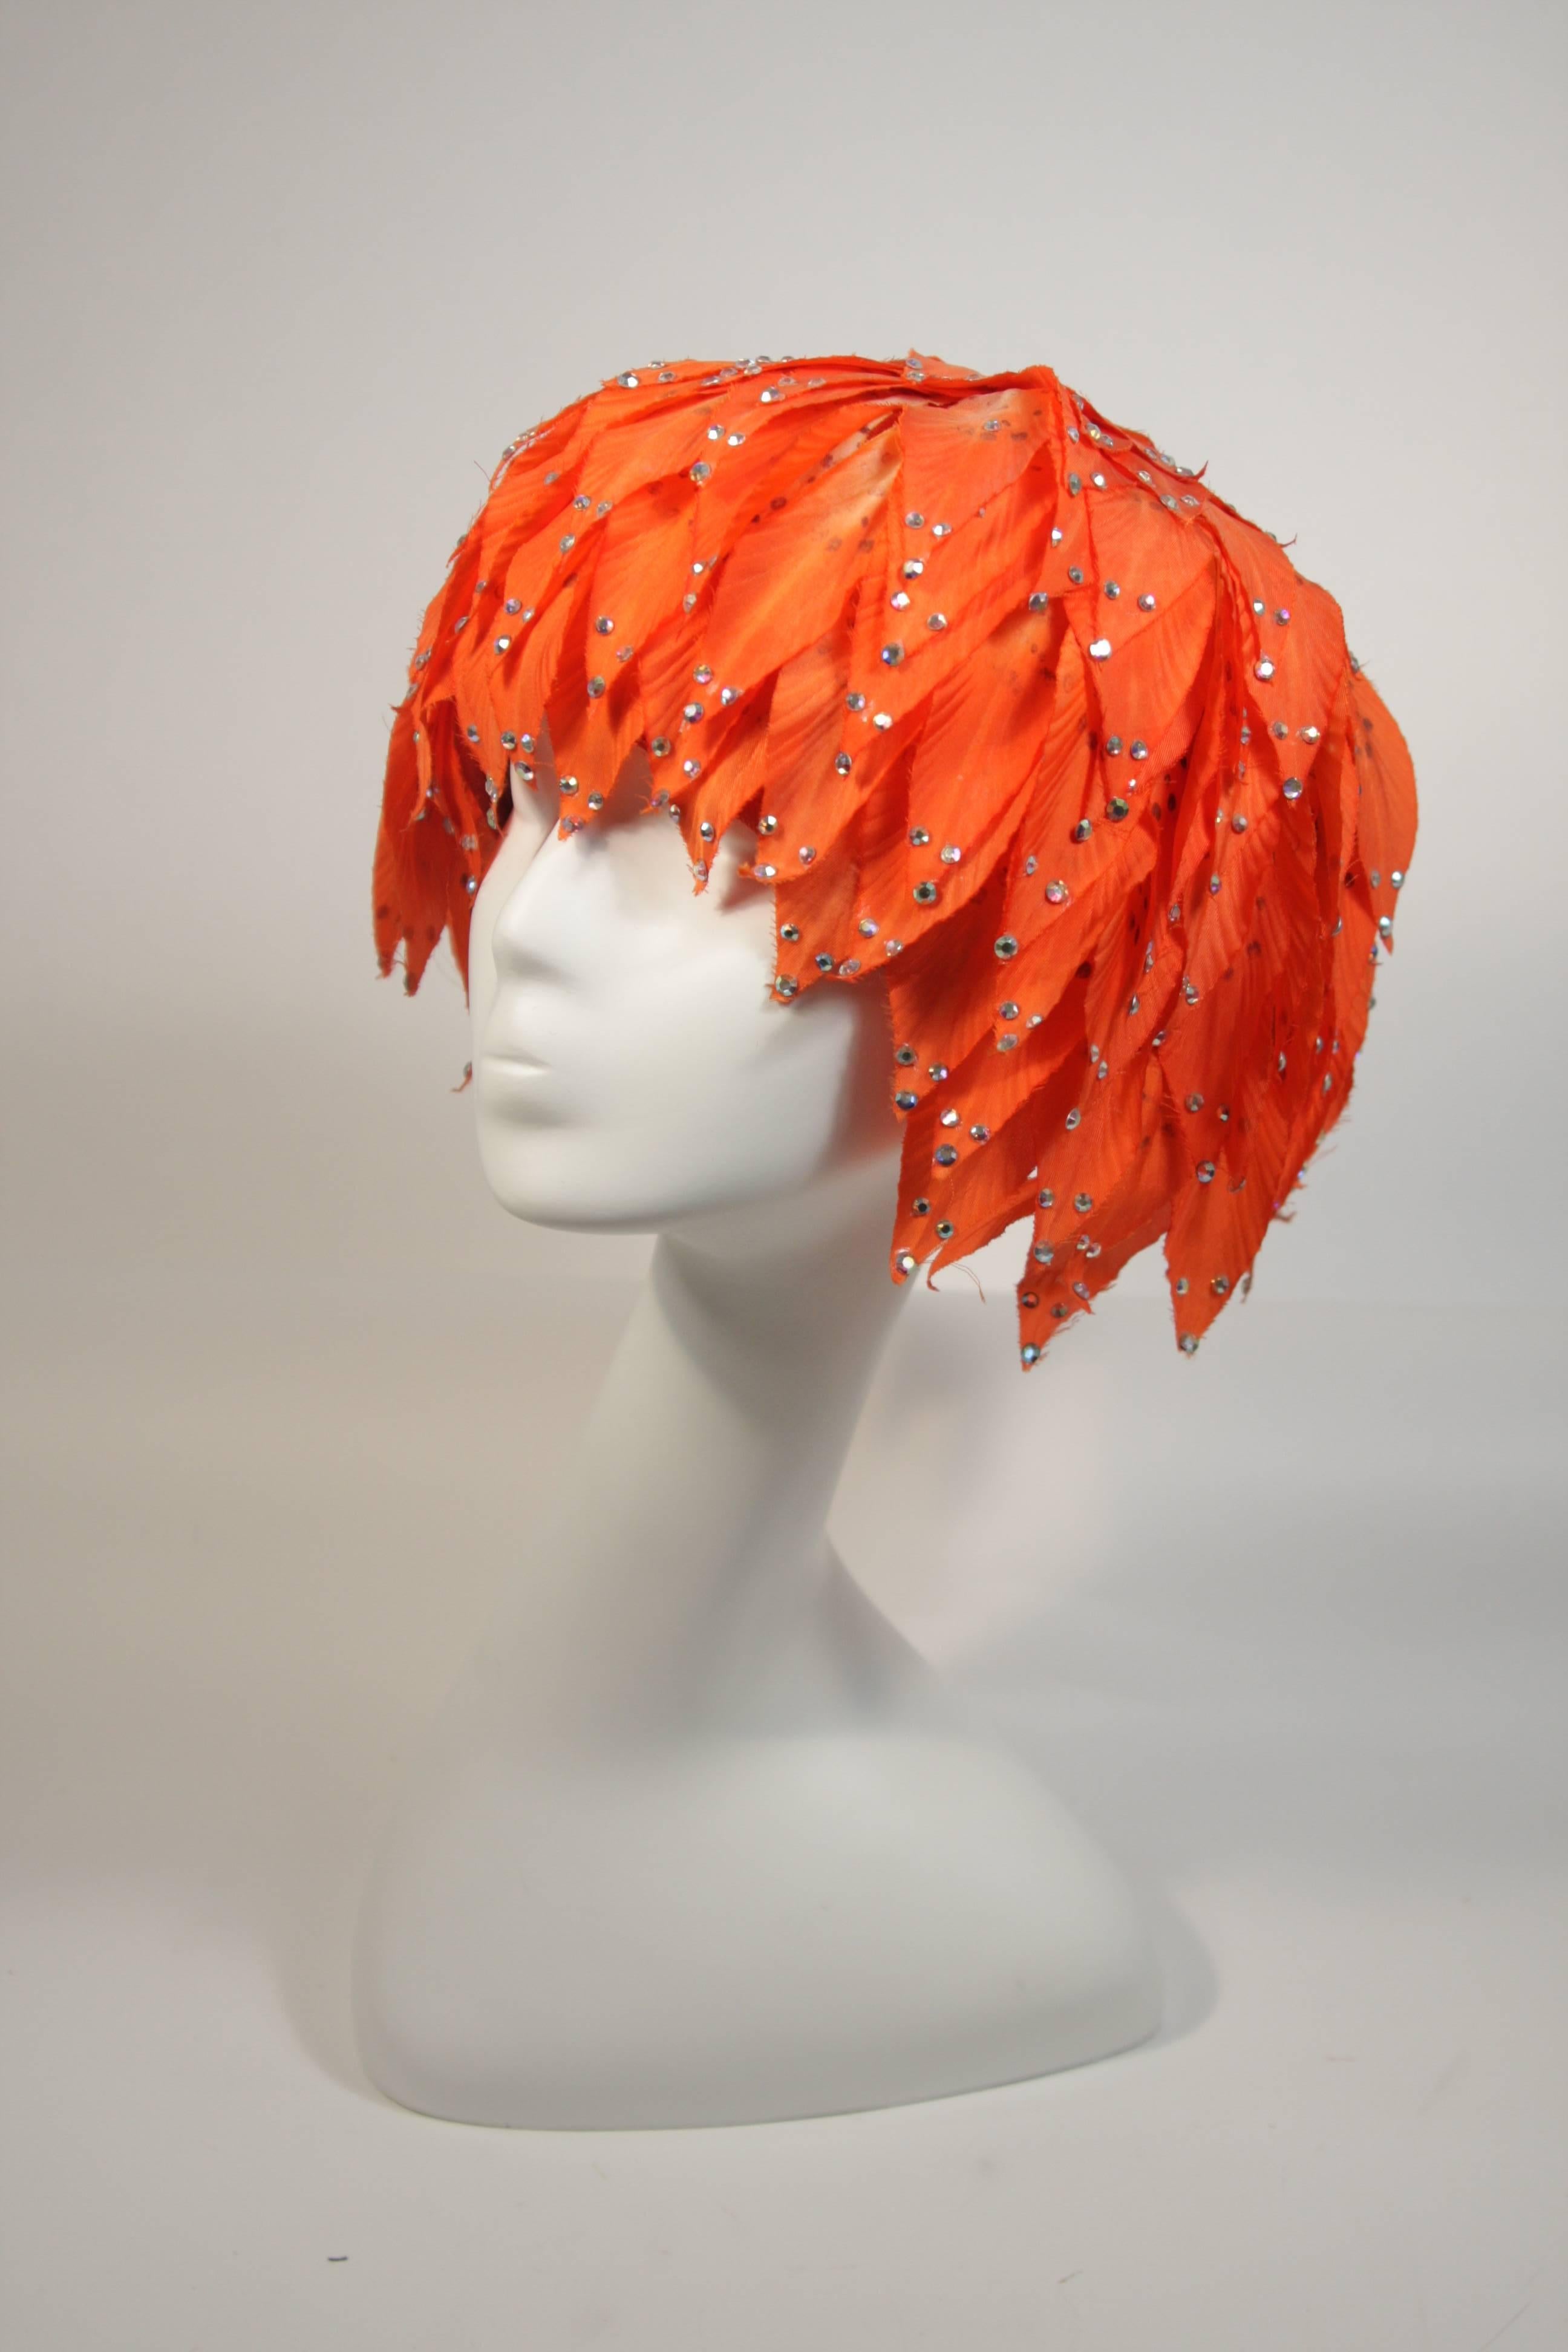 Women's Jack McConnell Orange Petal Hat with Rhinestones